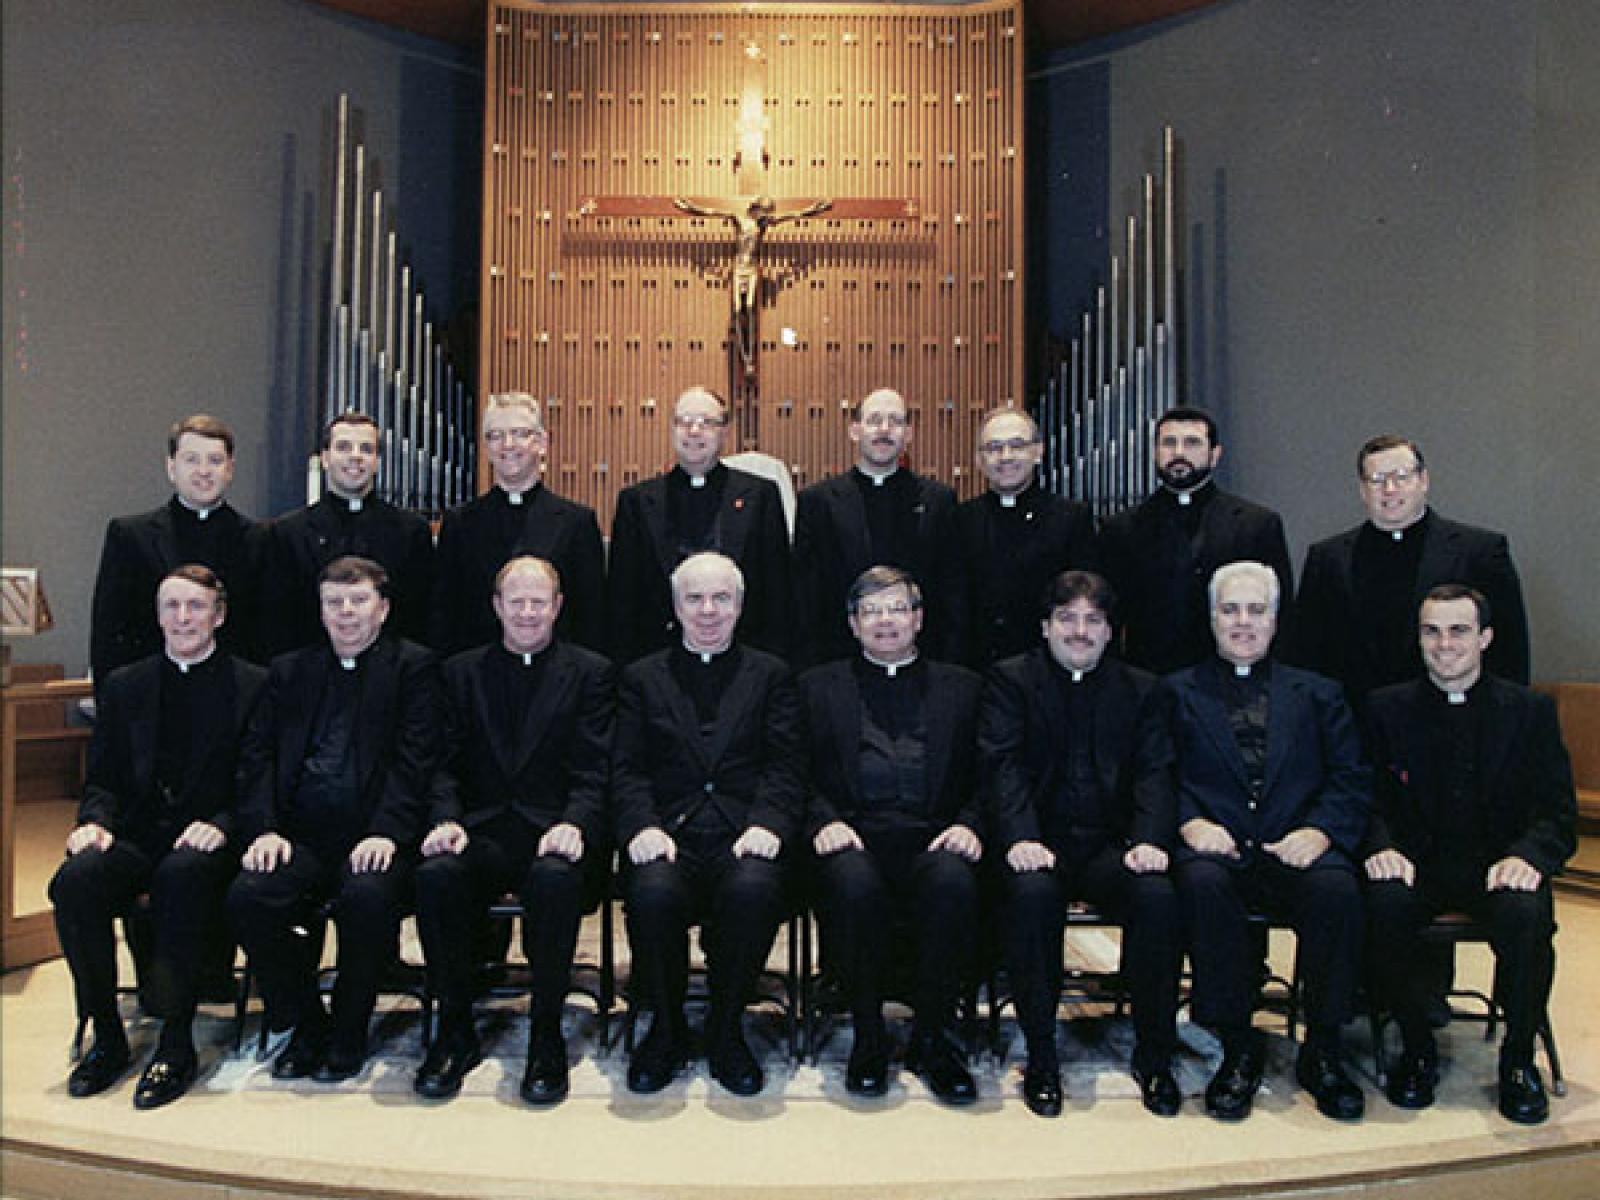 Class of 1996